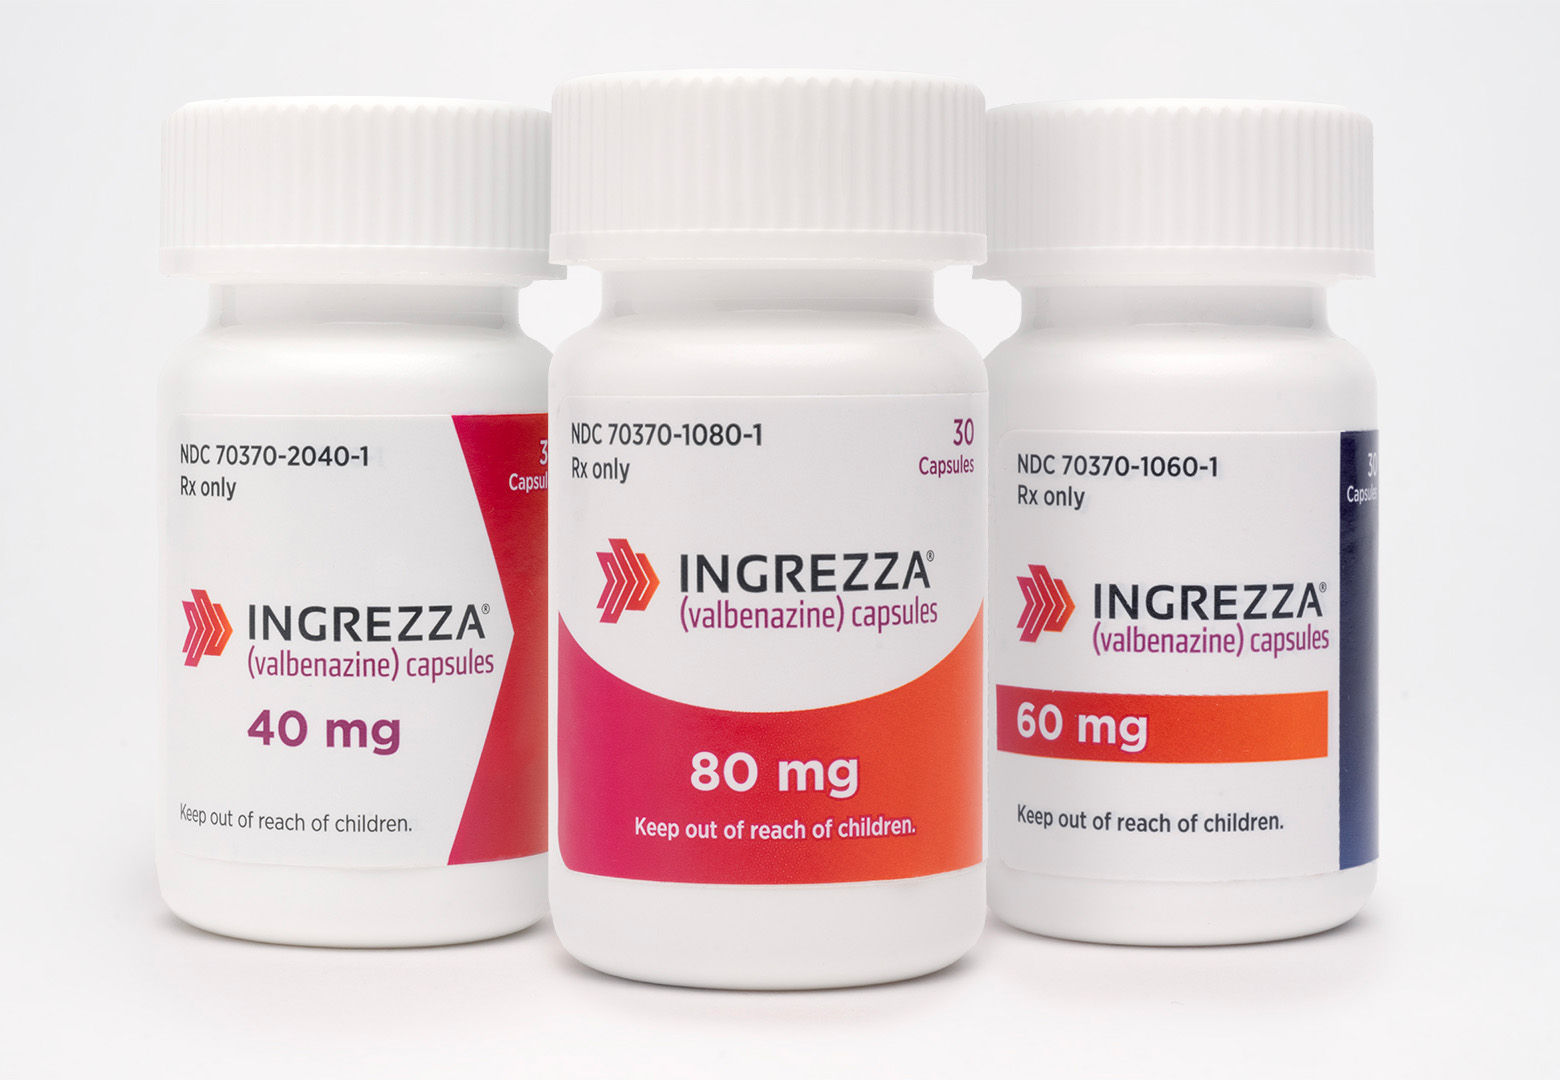 INGREZZA (40 mg, 60 mg, 80 mg) product images.